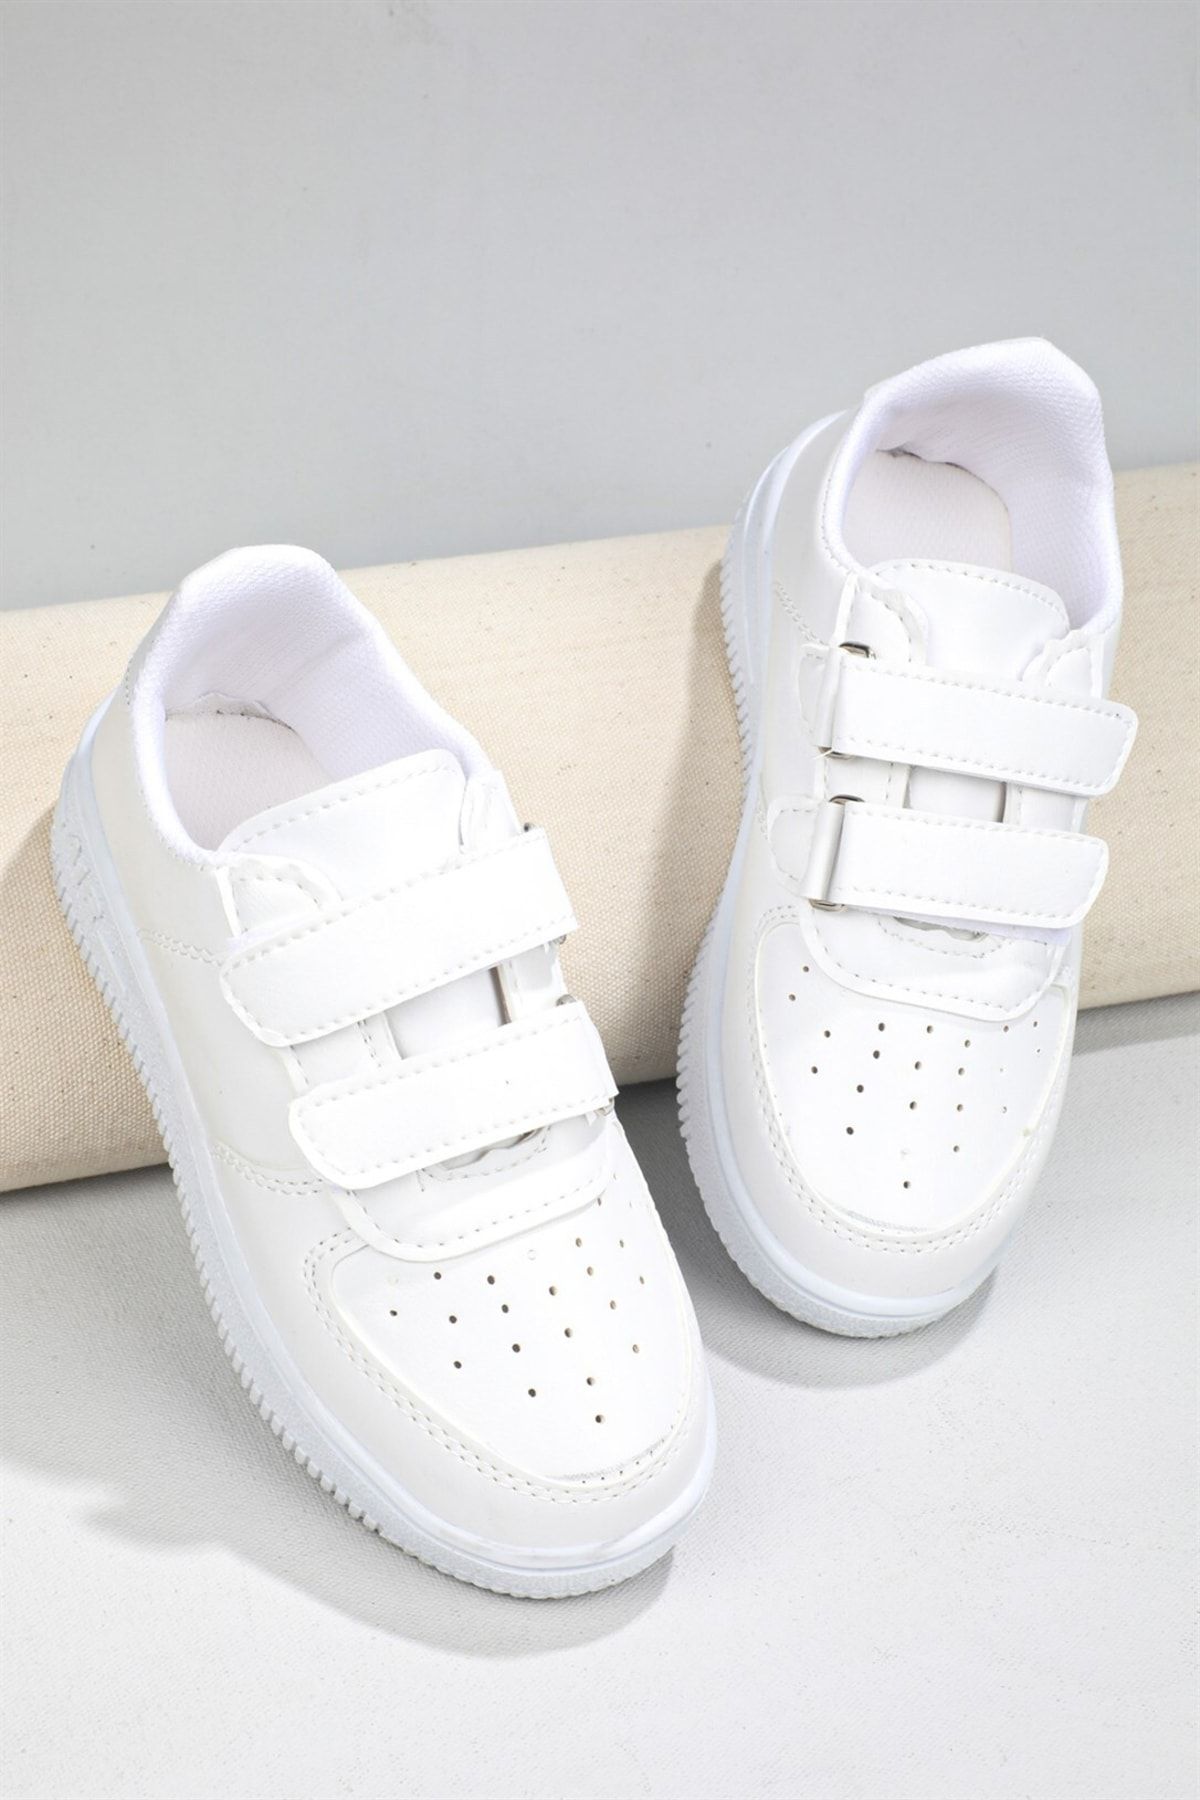 Beınsteps Air Taban Rahat Nefes Alır Beyaz Beyaz Çocuk Spor Ayakkabı Aır V2